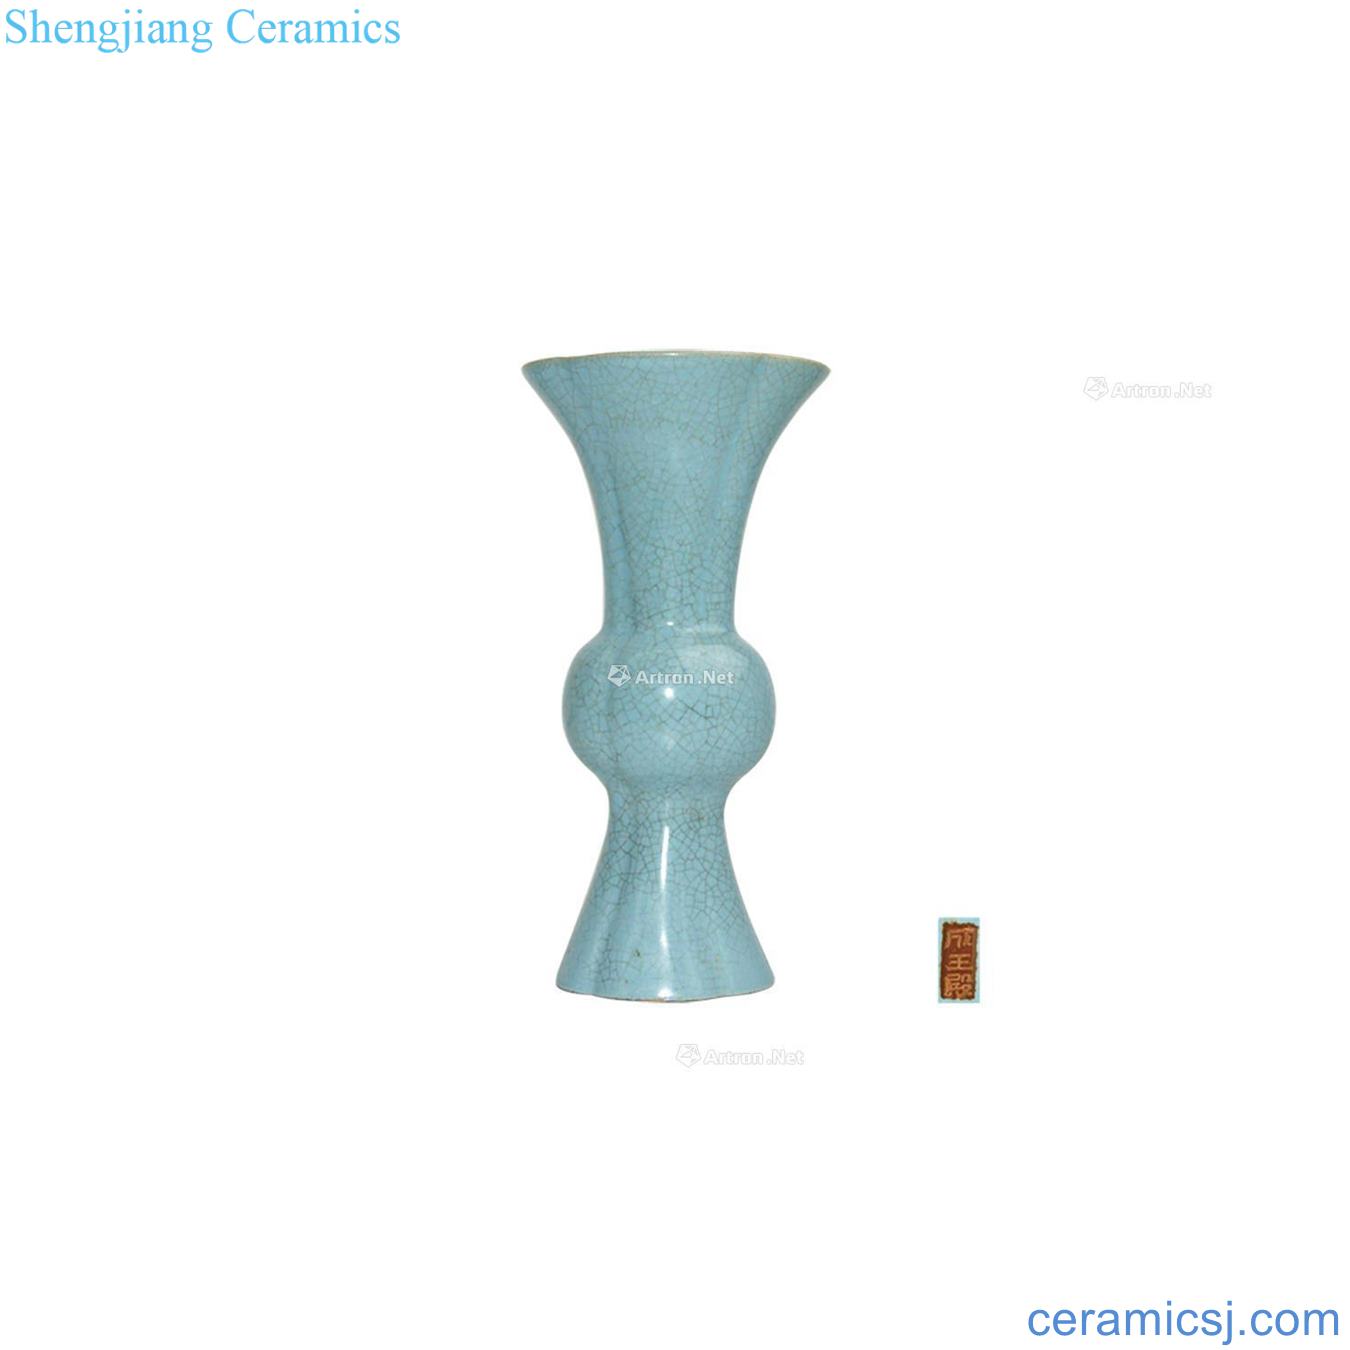 The azure glaze your kiln vase with flowers